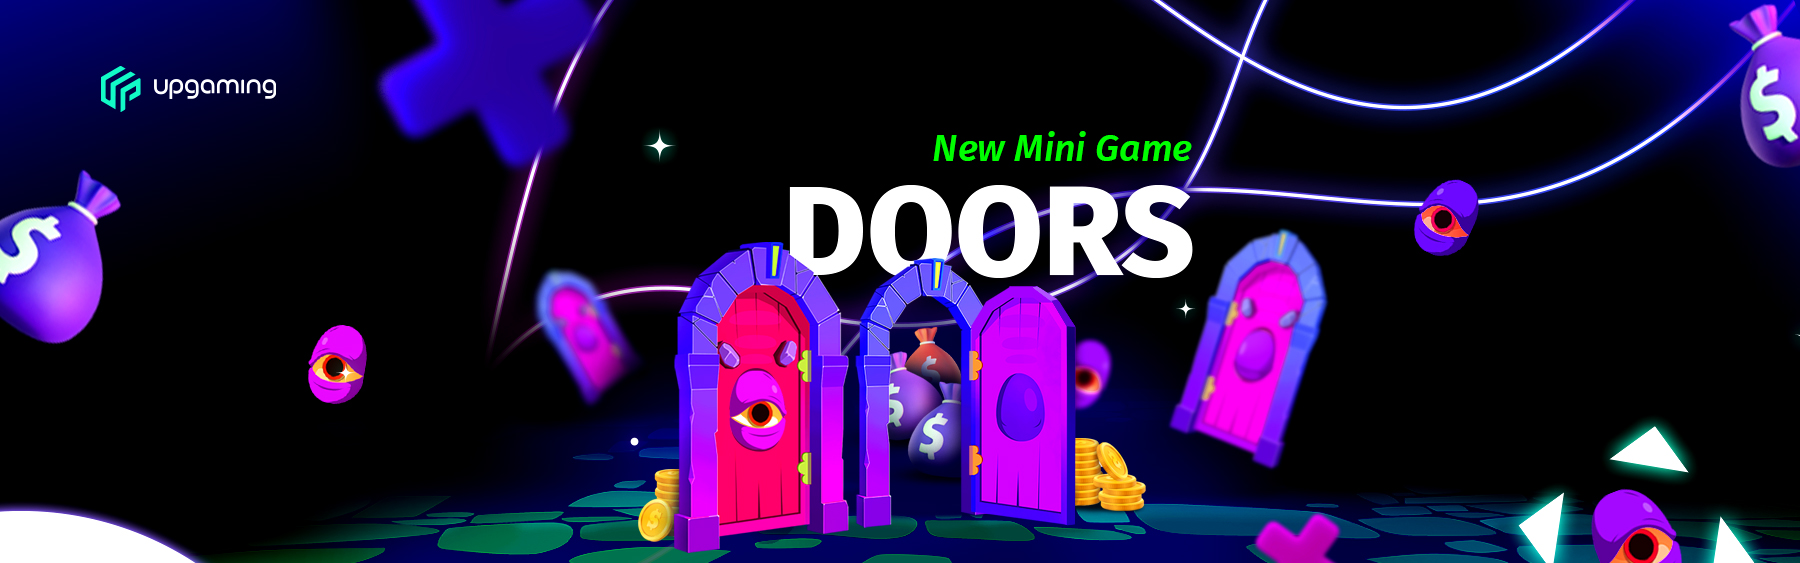 Doors - Upgaming's new mini game